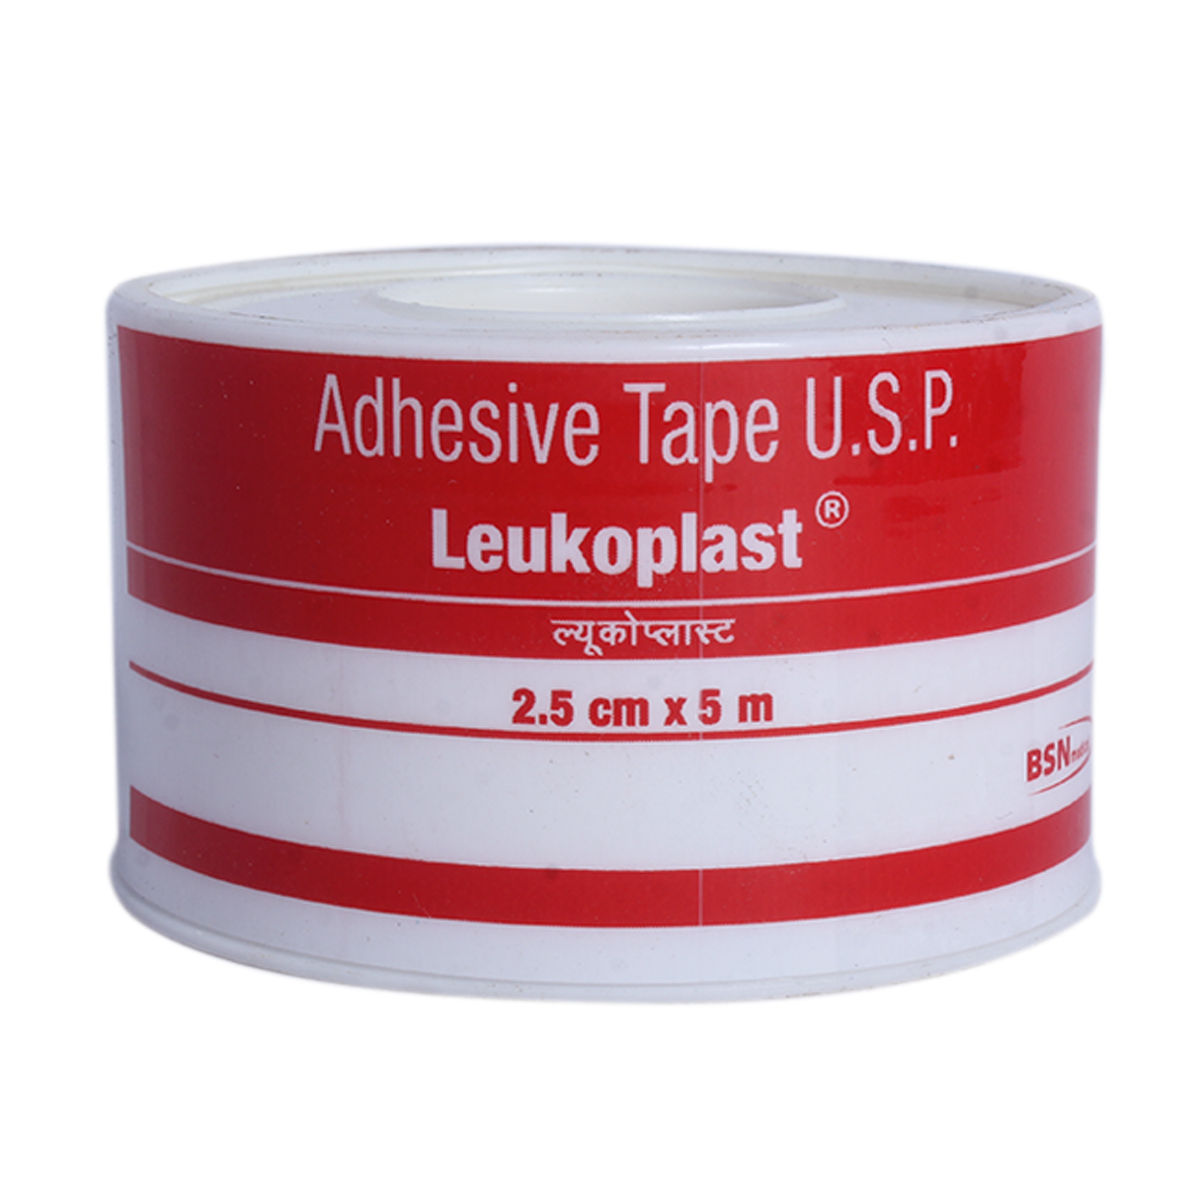 Leukoplast - 2.5/5Mt 1's, Pack of 1 